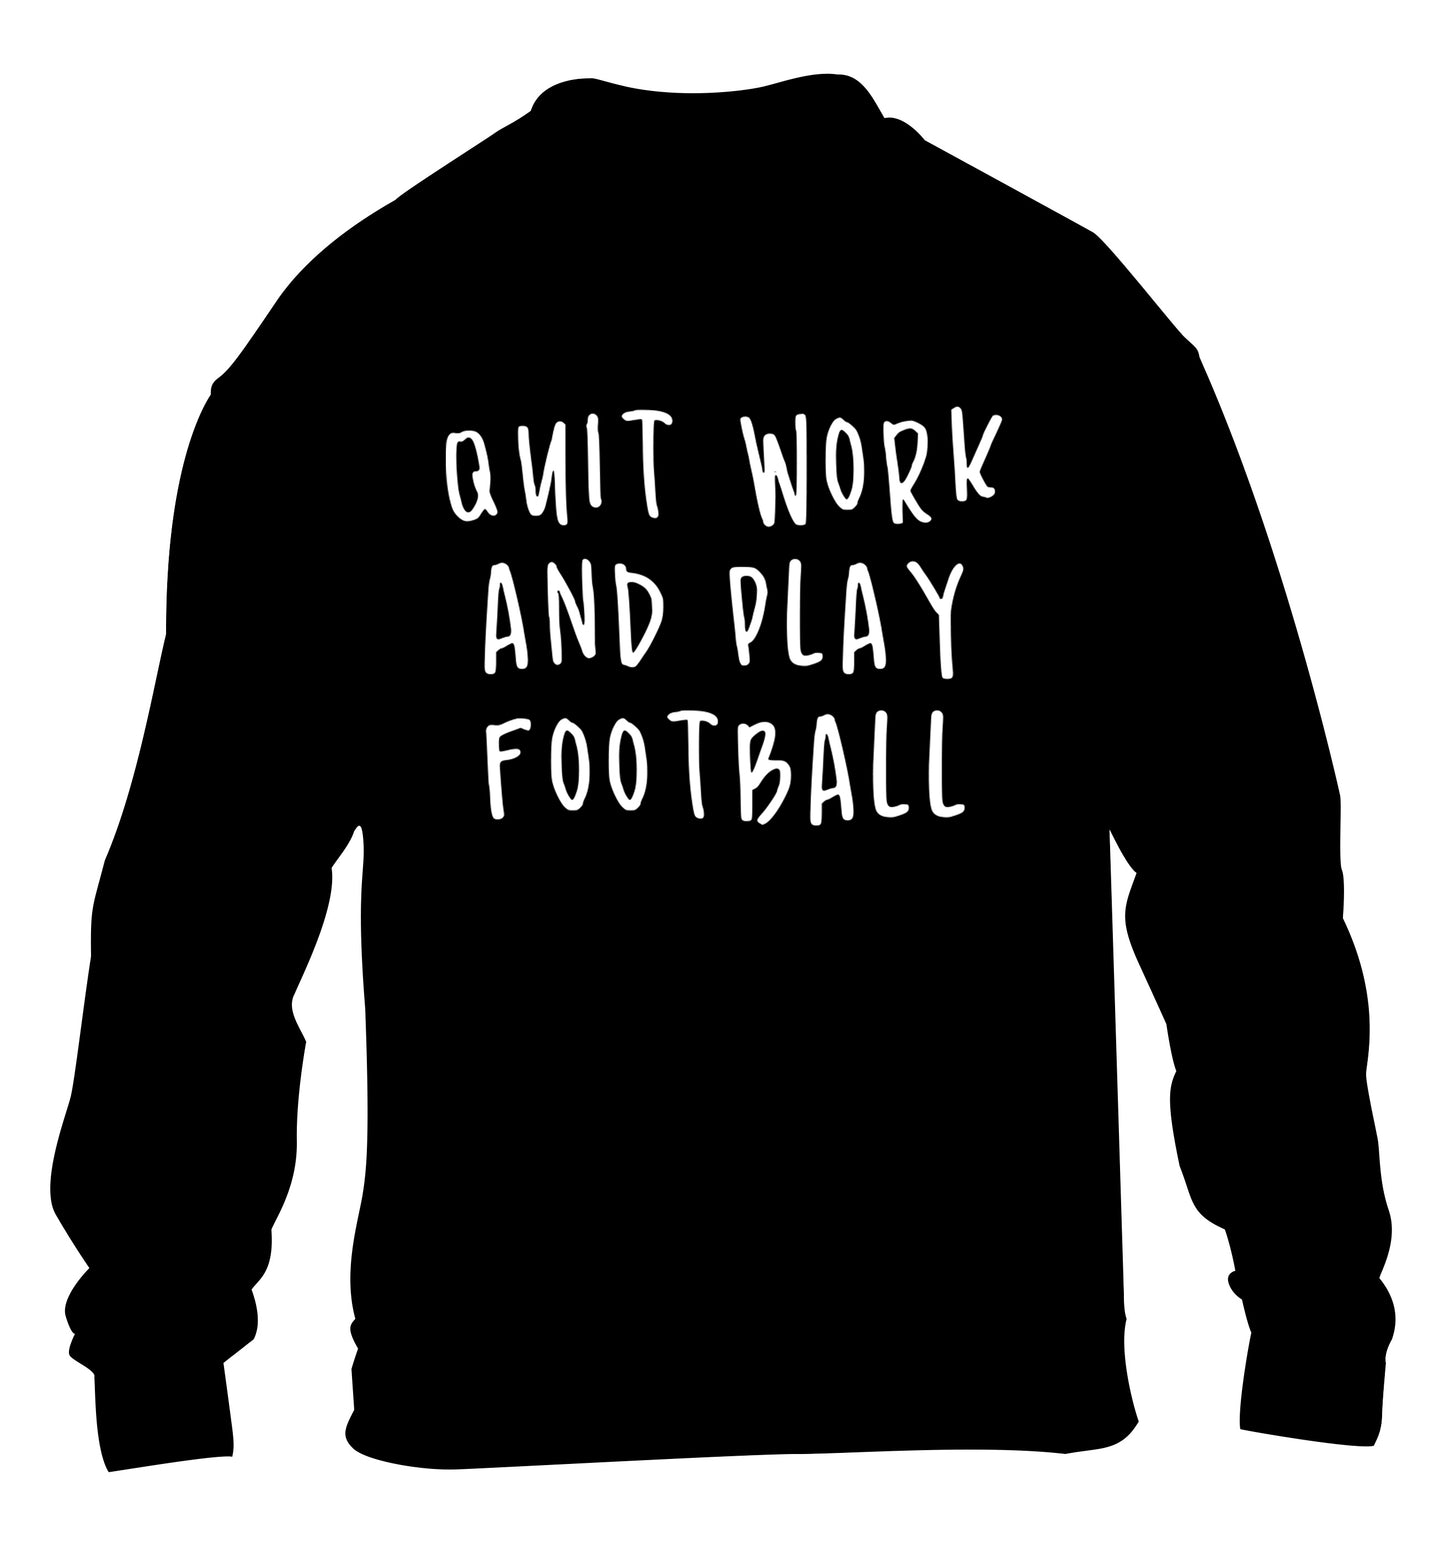 Quit work play football children's black sweater 12-14 Years